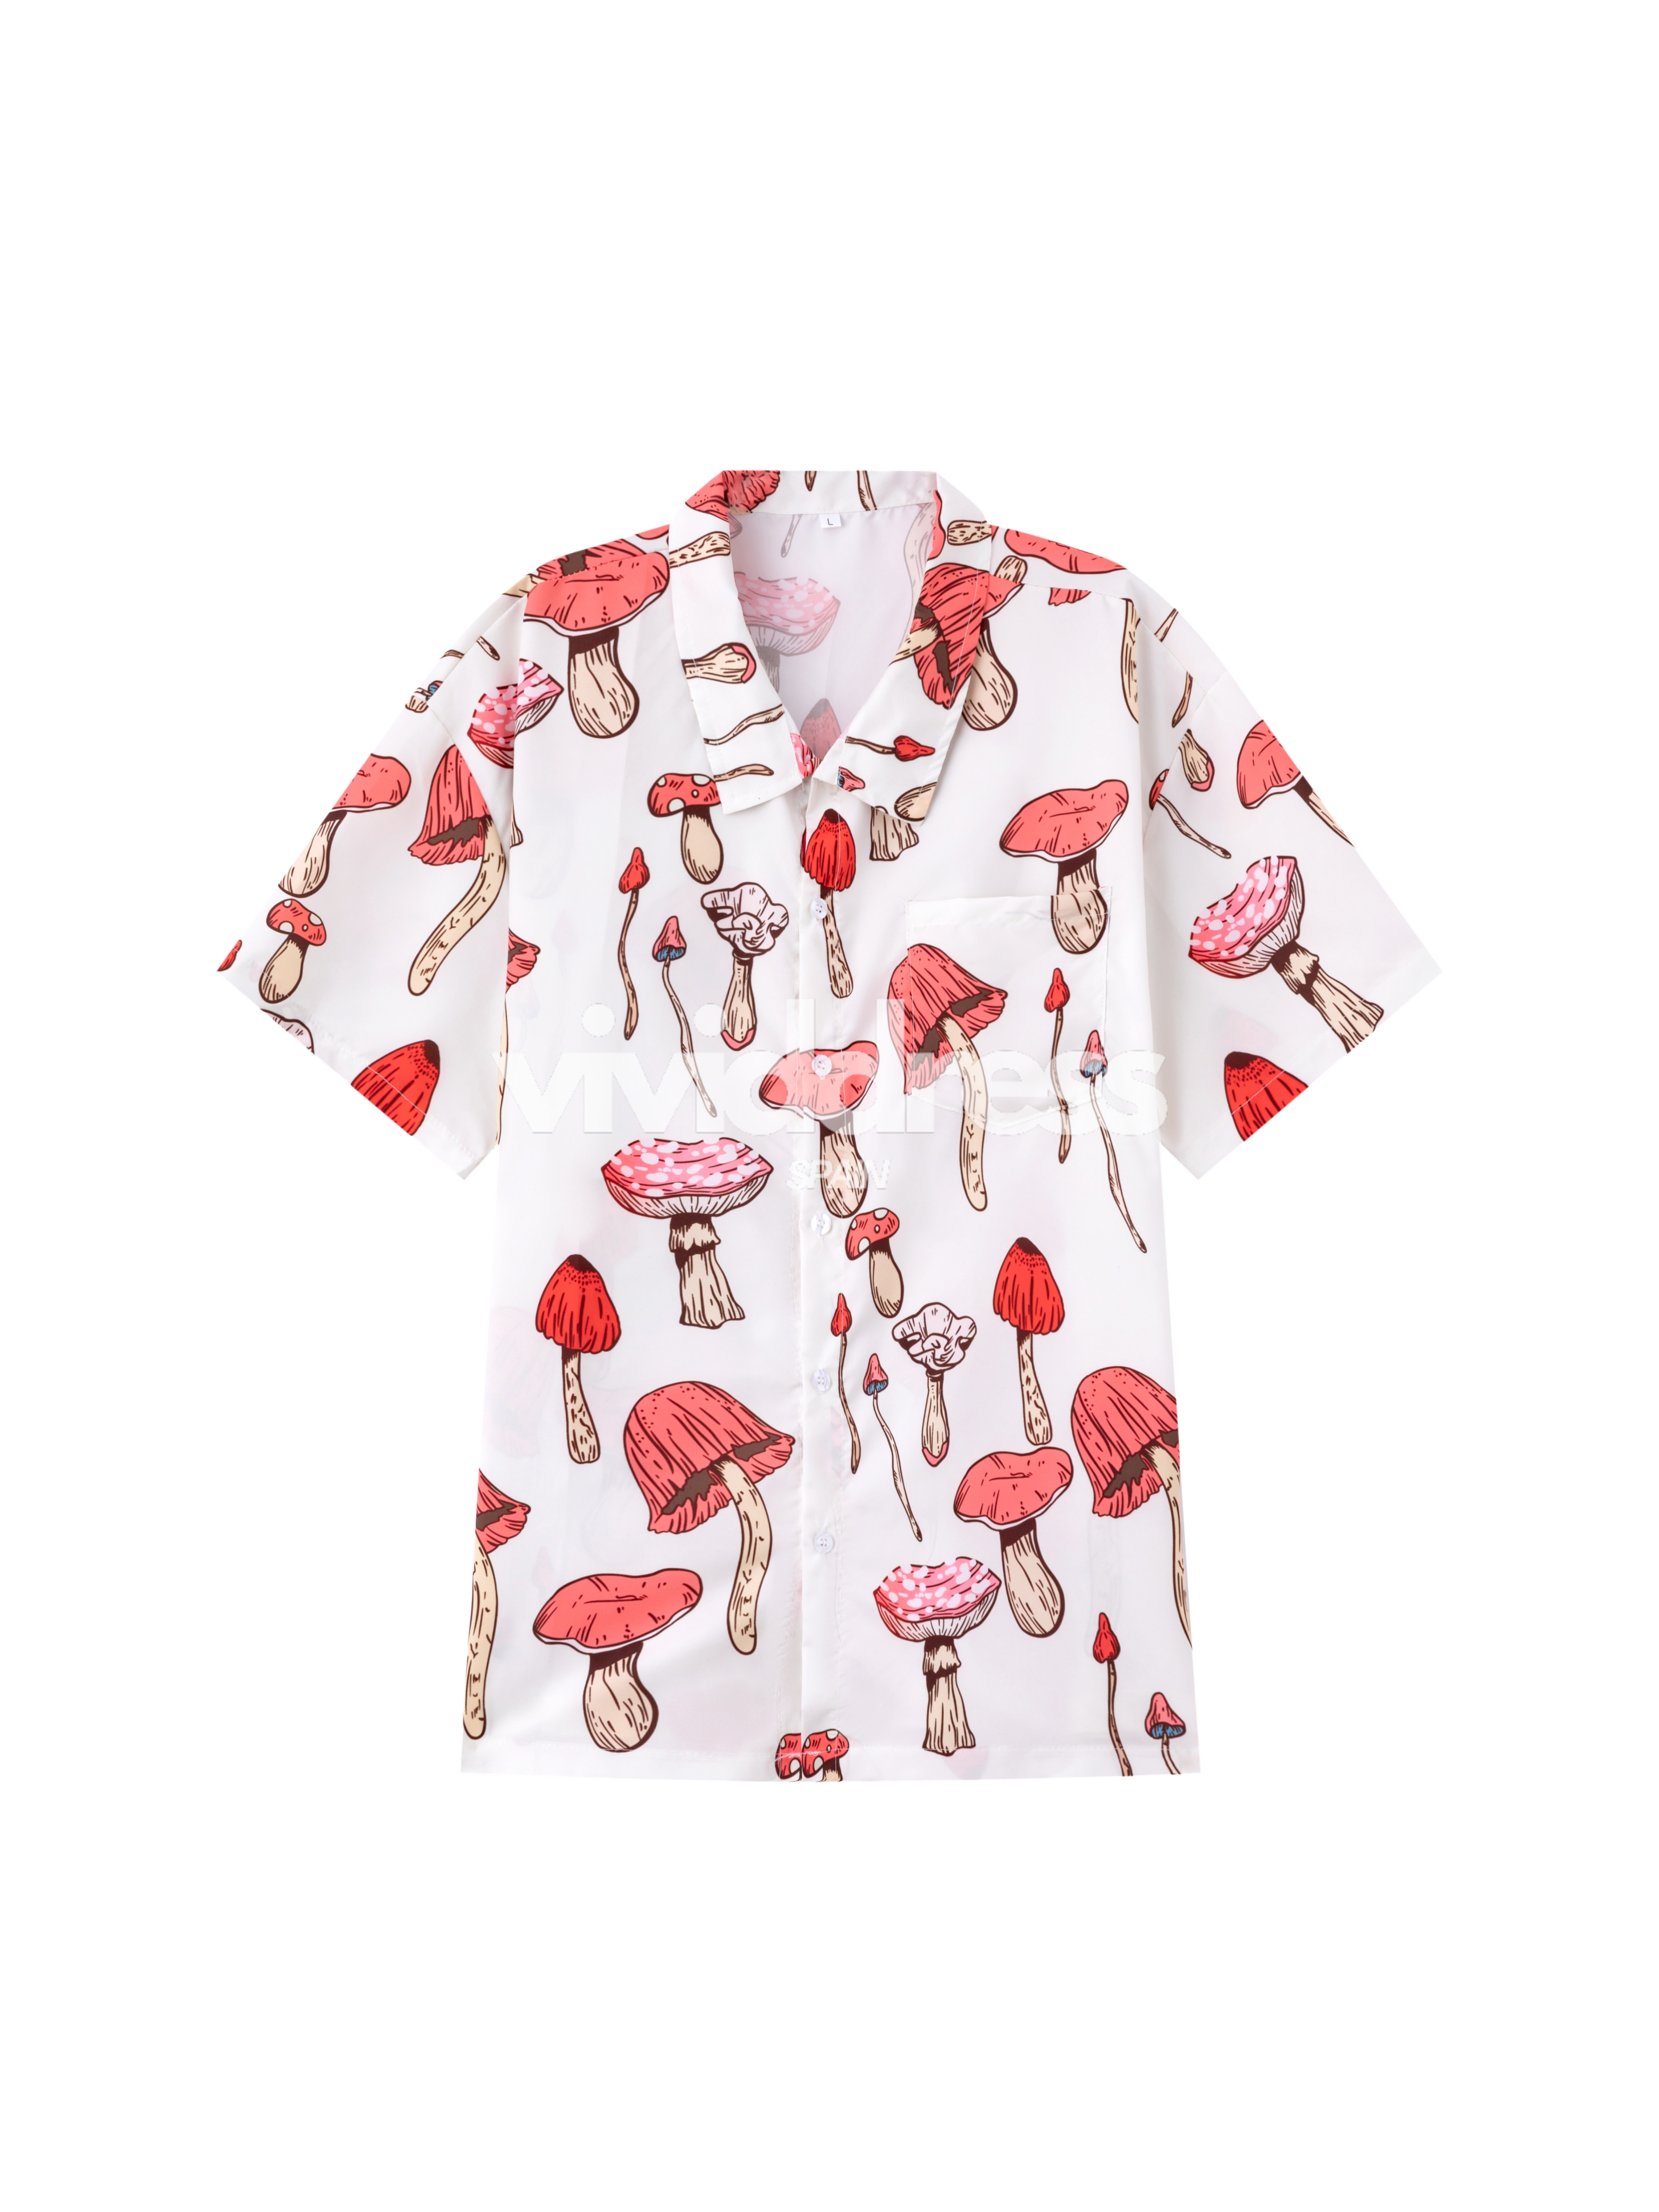 Men's Casual Mushroom Print Beach Summer Holiday Short Sleeve Shirt